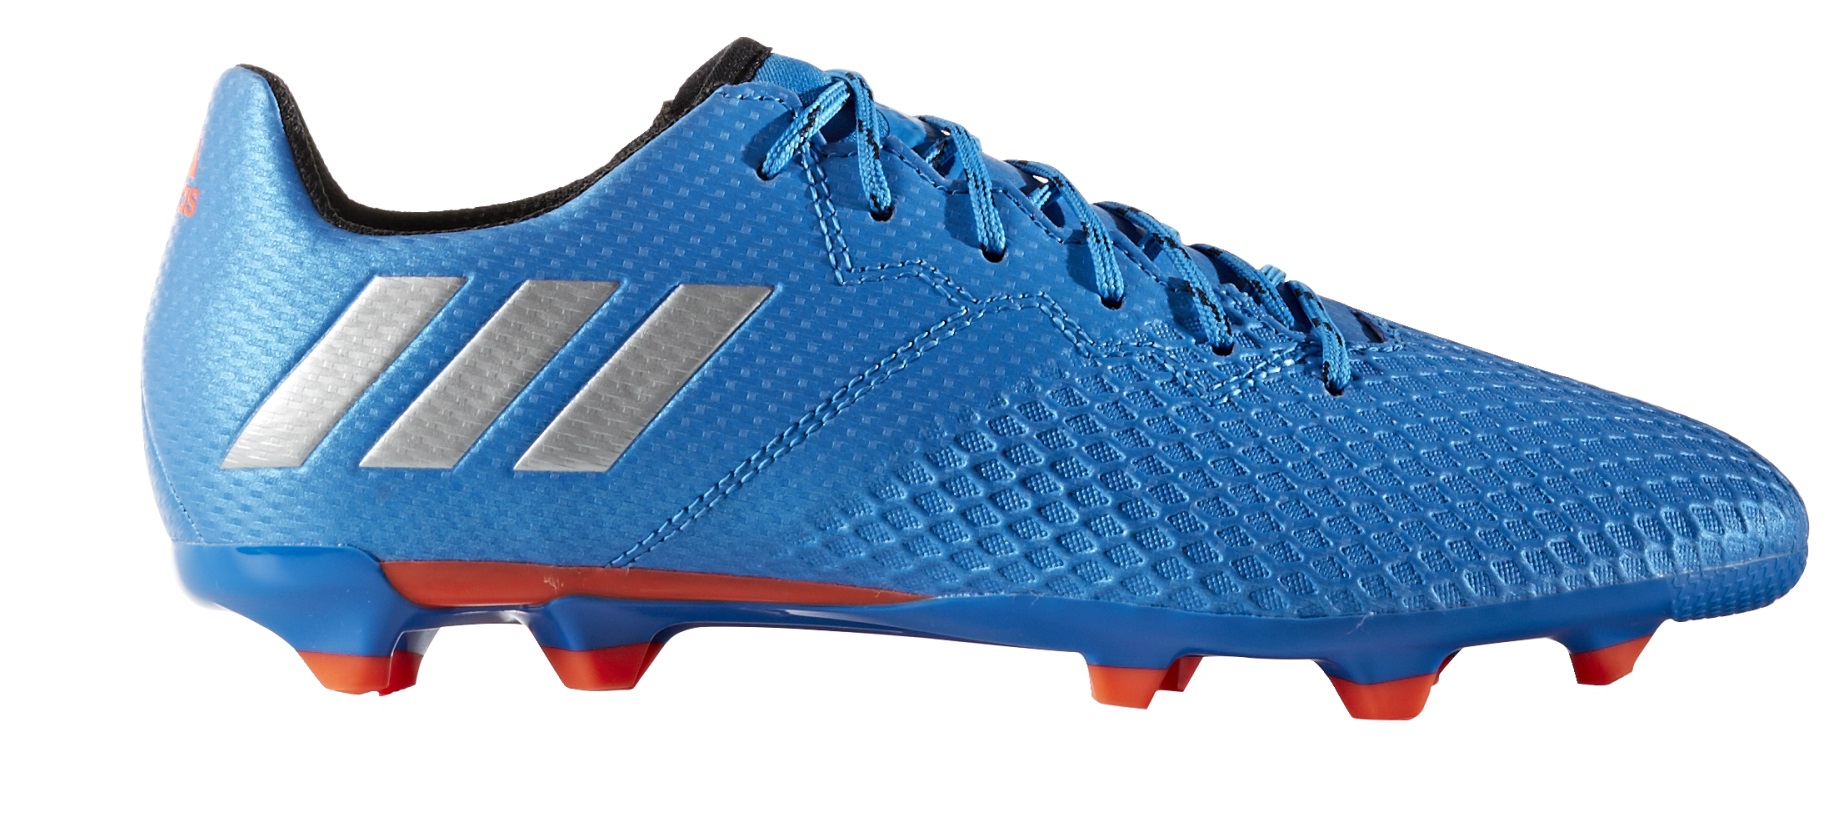 Fútbol zapatos de Niño Adidas Messi 16.3 FG azul naranja Adidas - SportIT.com